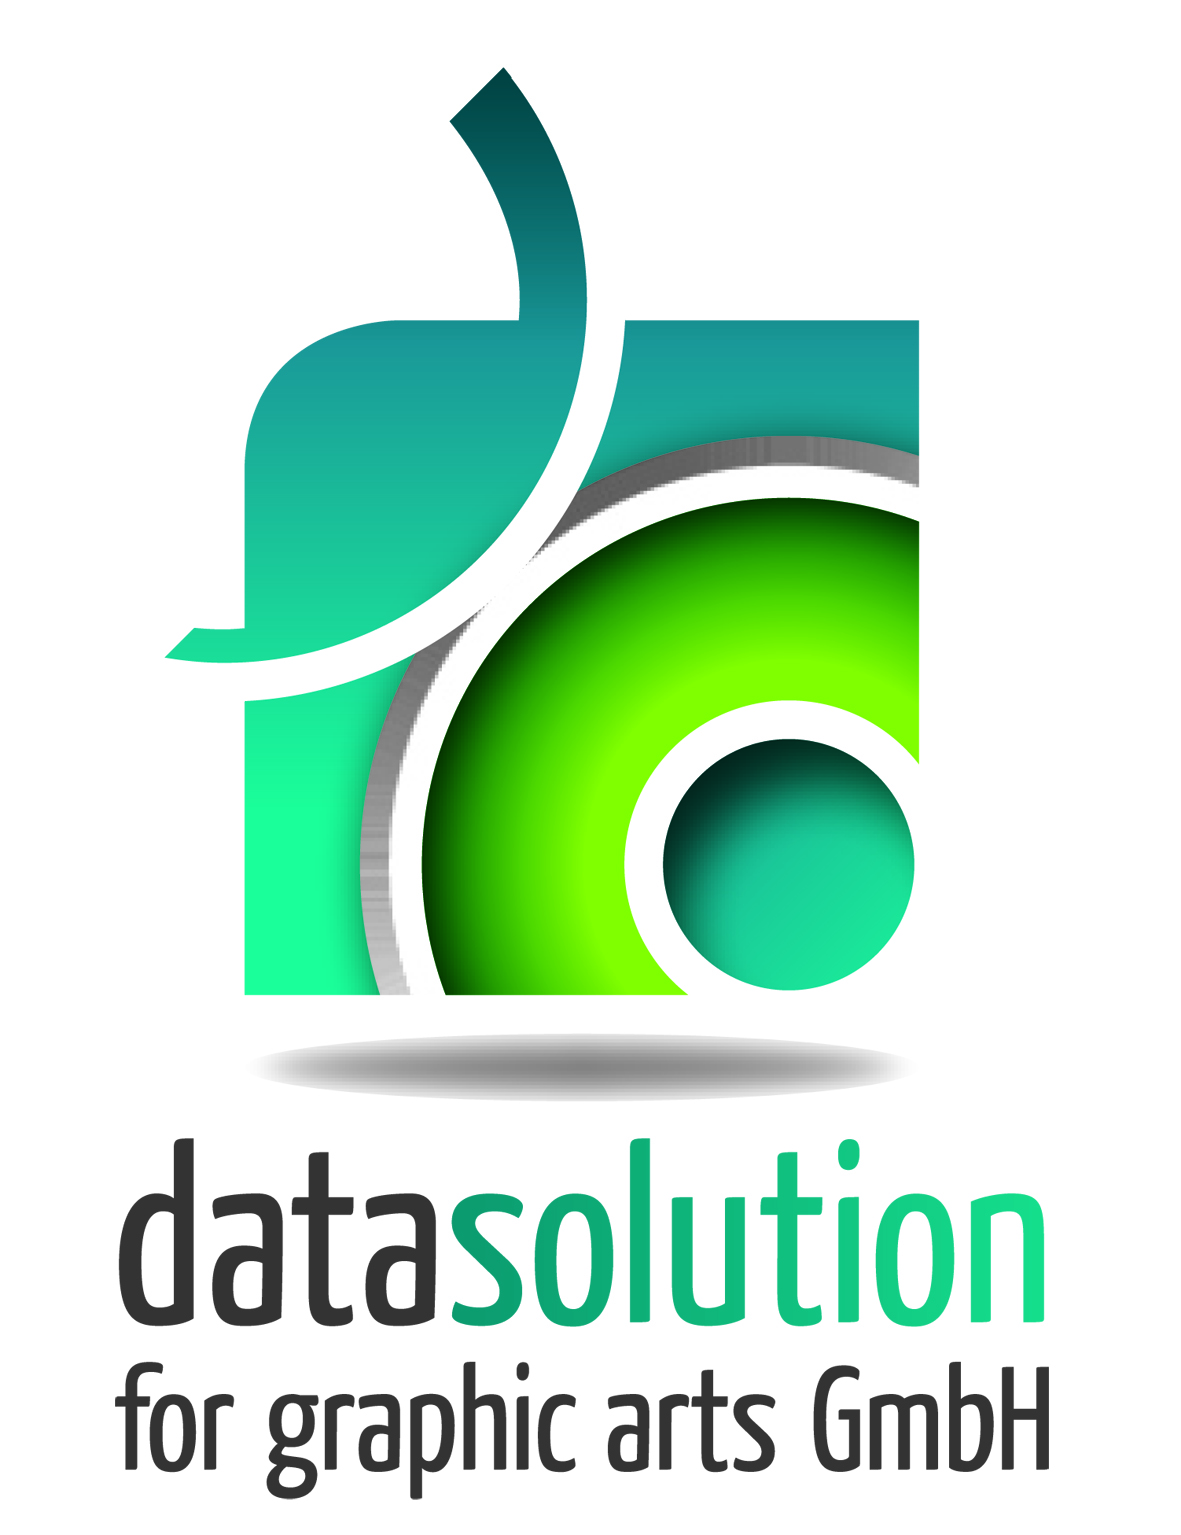 datasolution for graphic arts GmbH